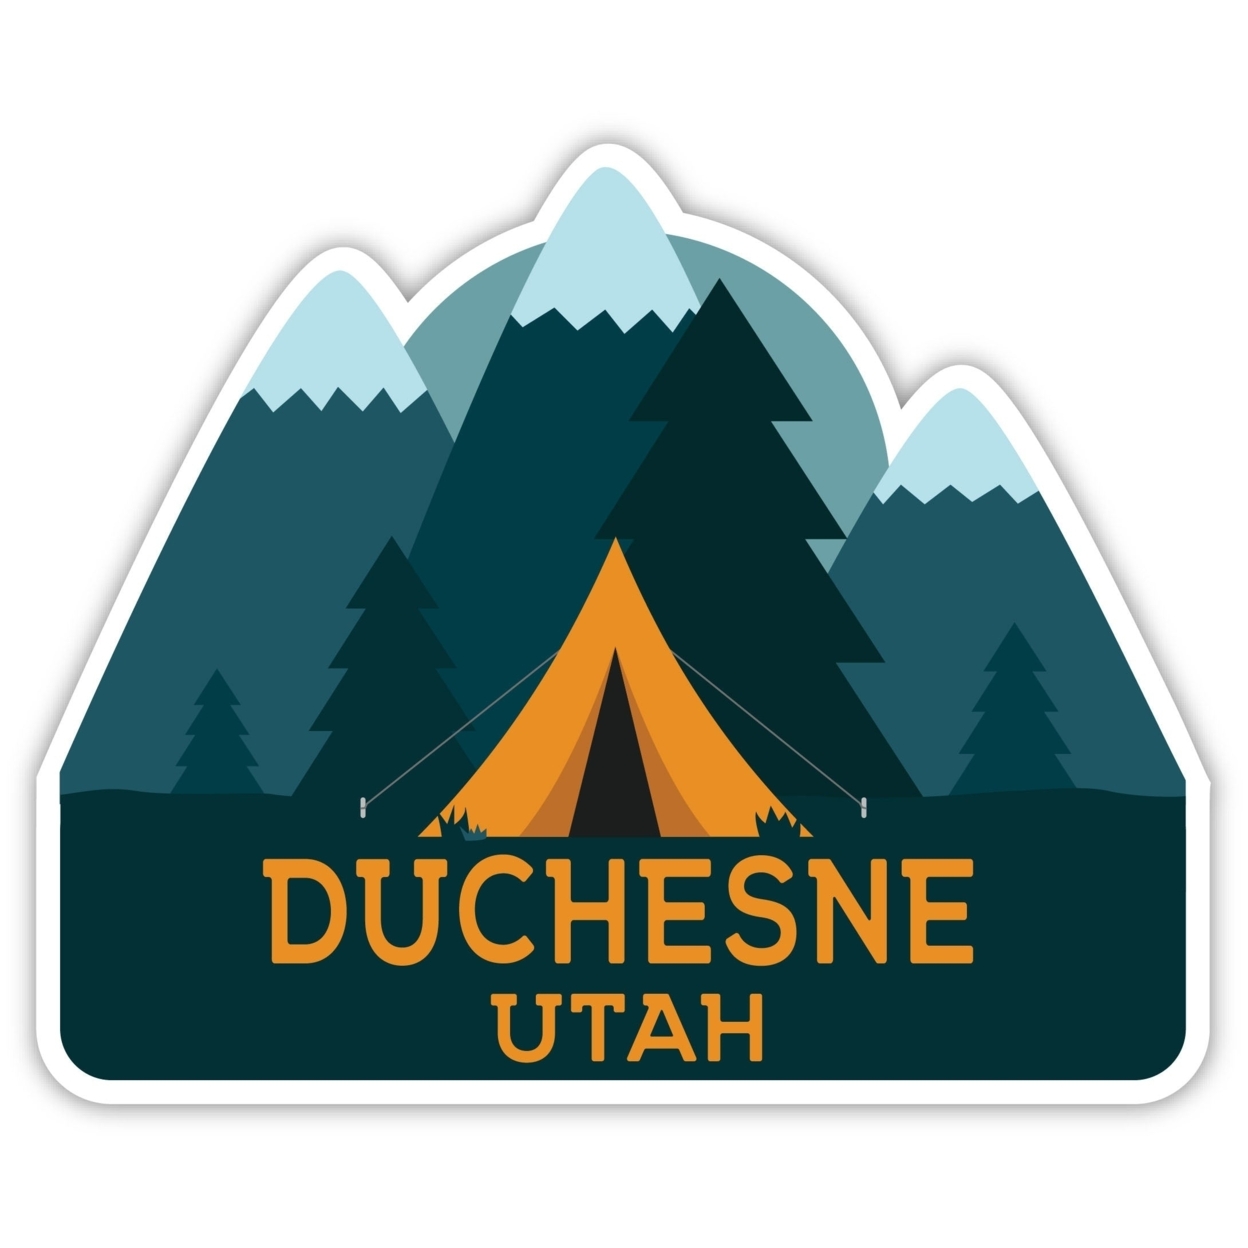 Duchesne Utah Souvenir Decorative Stickers (Choose Theme And Size) - Single Unit, 8-Inch, Adventures Awaits